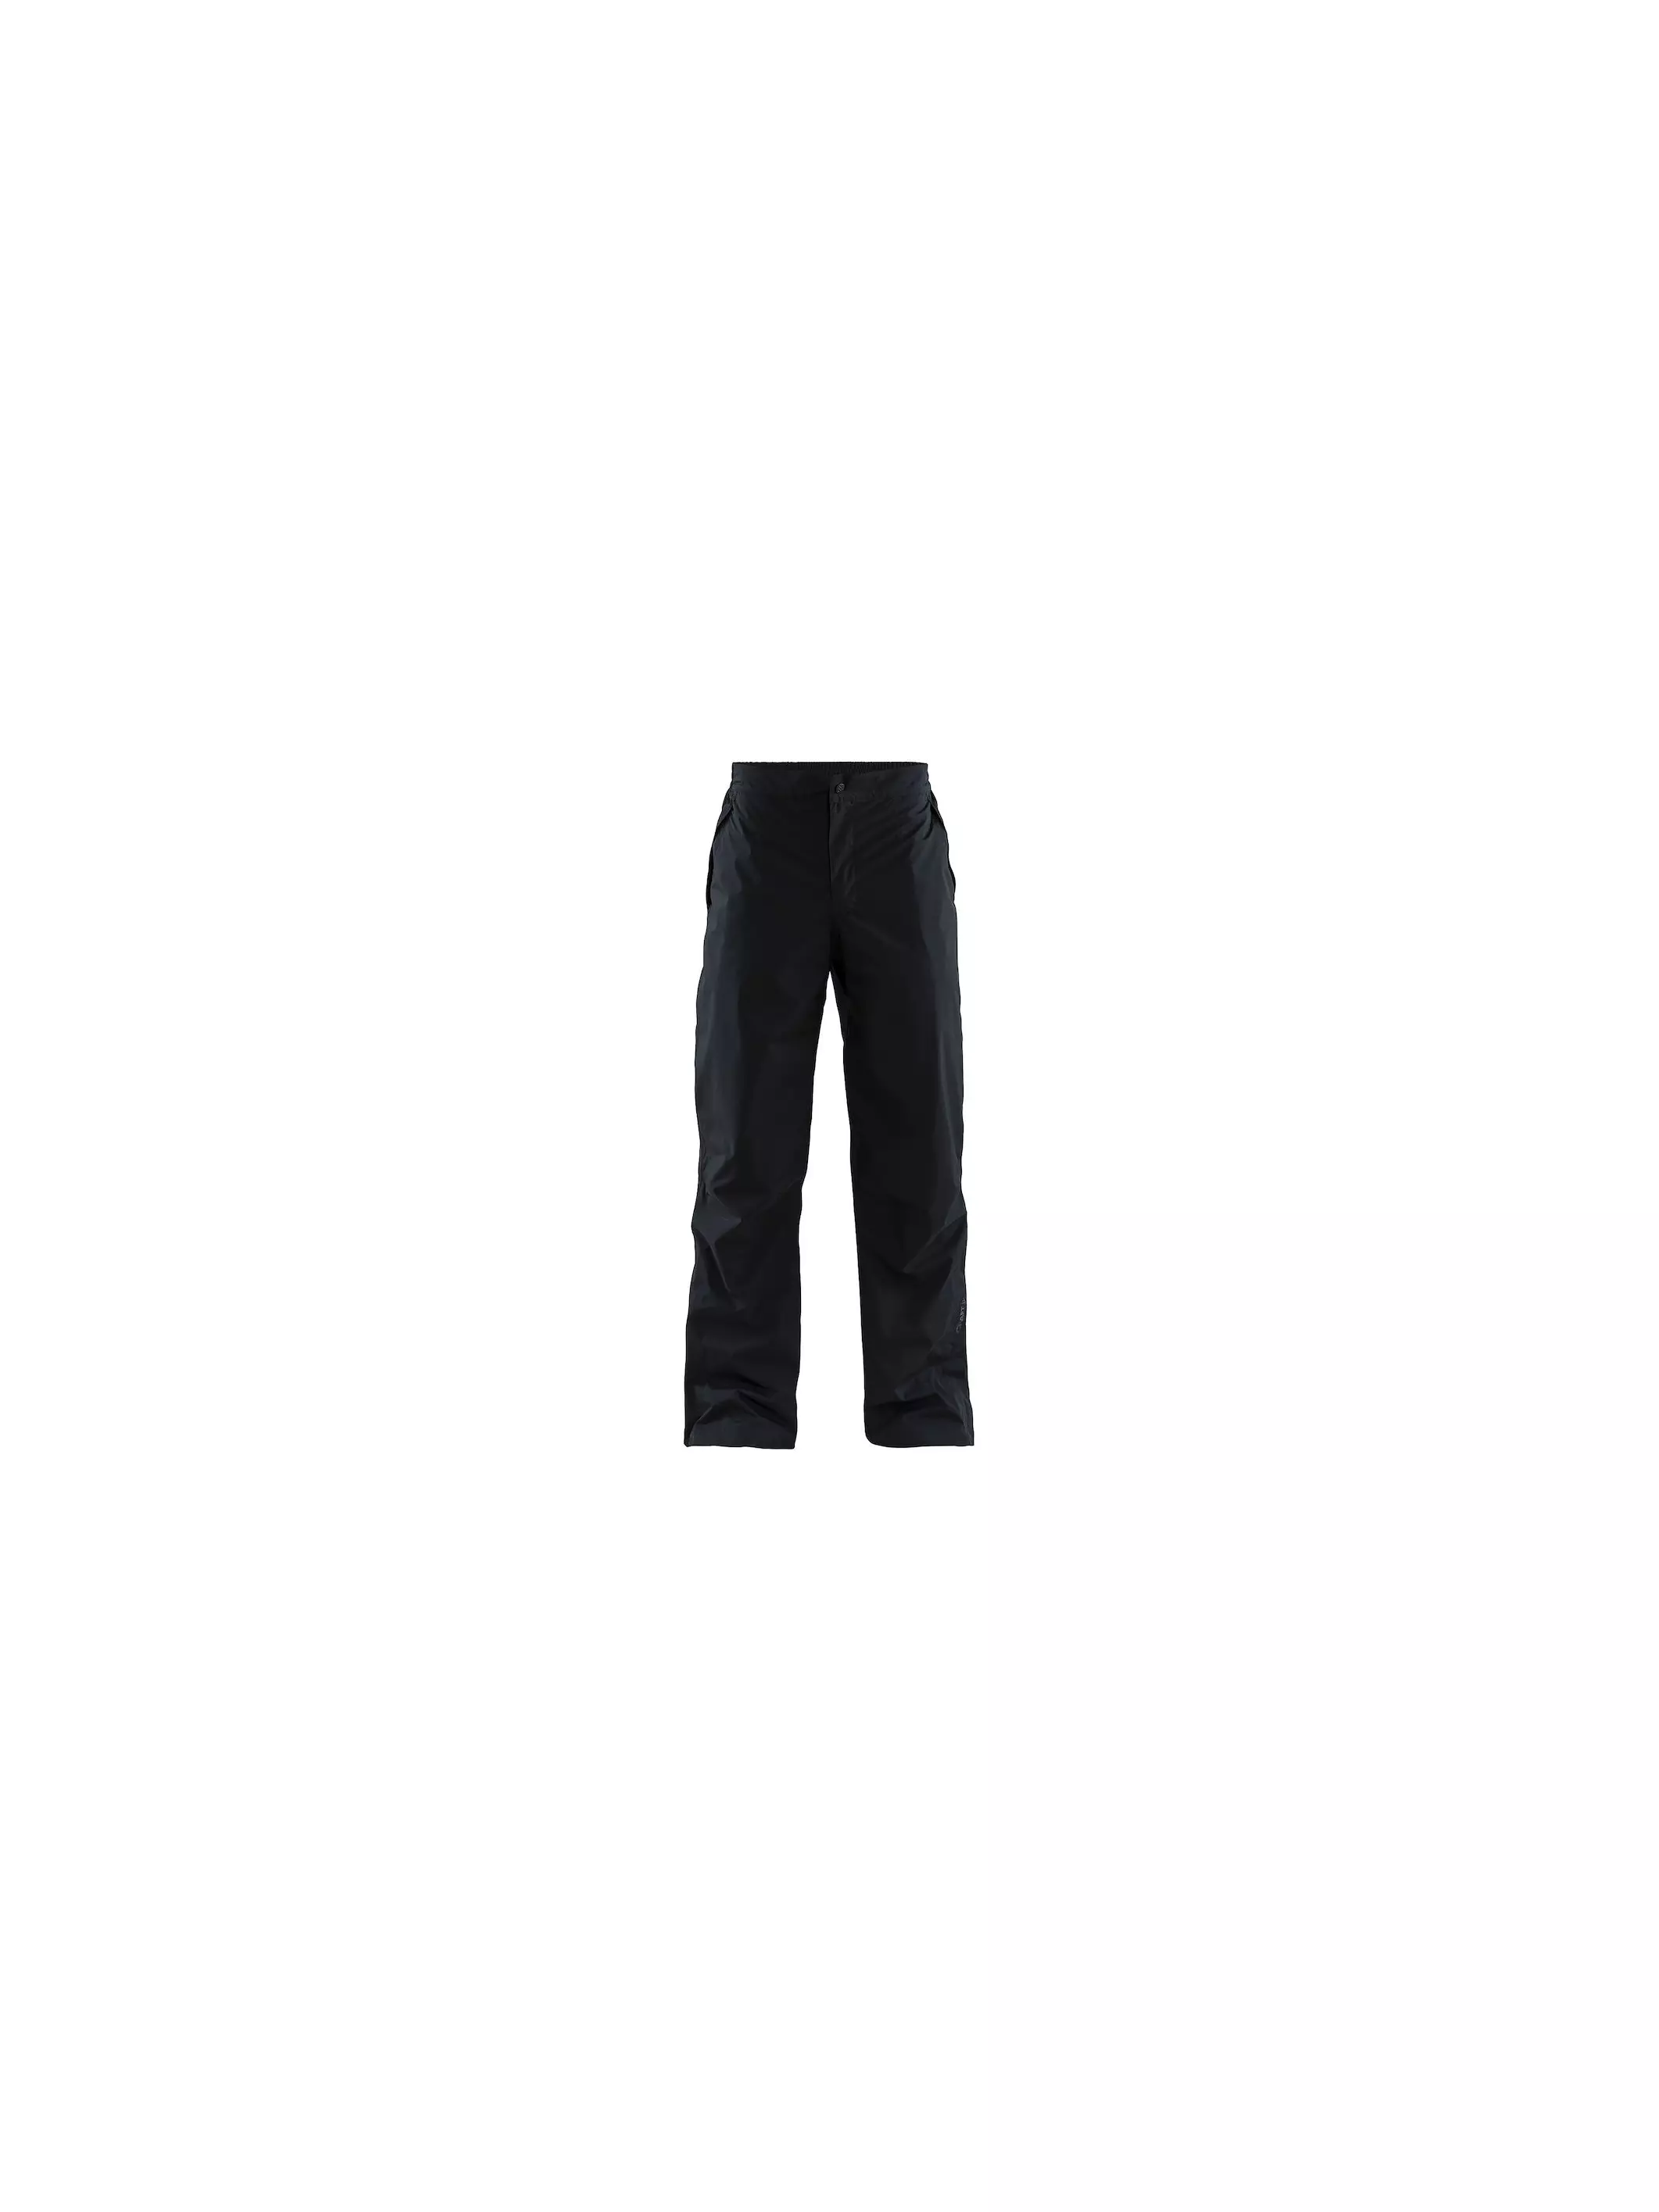 Pantalons & Collants Craft URBAN RAIN PANTS M - 1906318